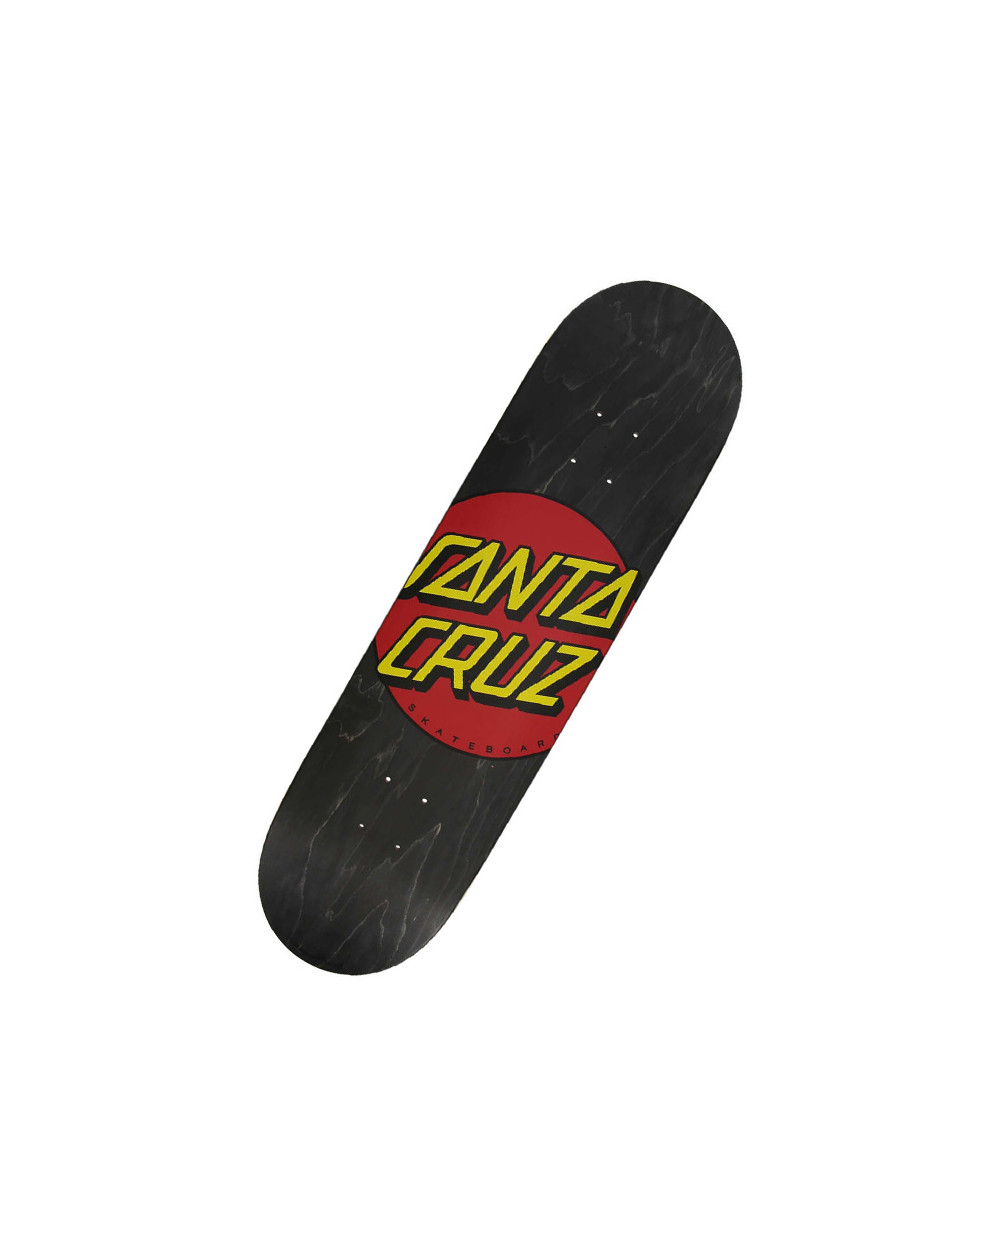 Santa Cruz Classic Dot - Skate